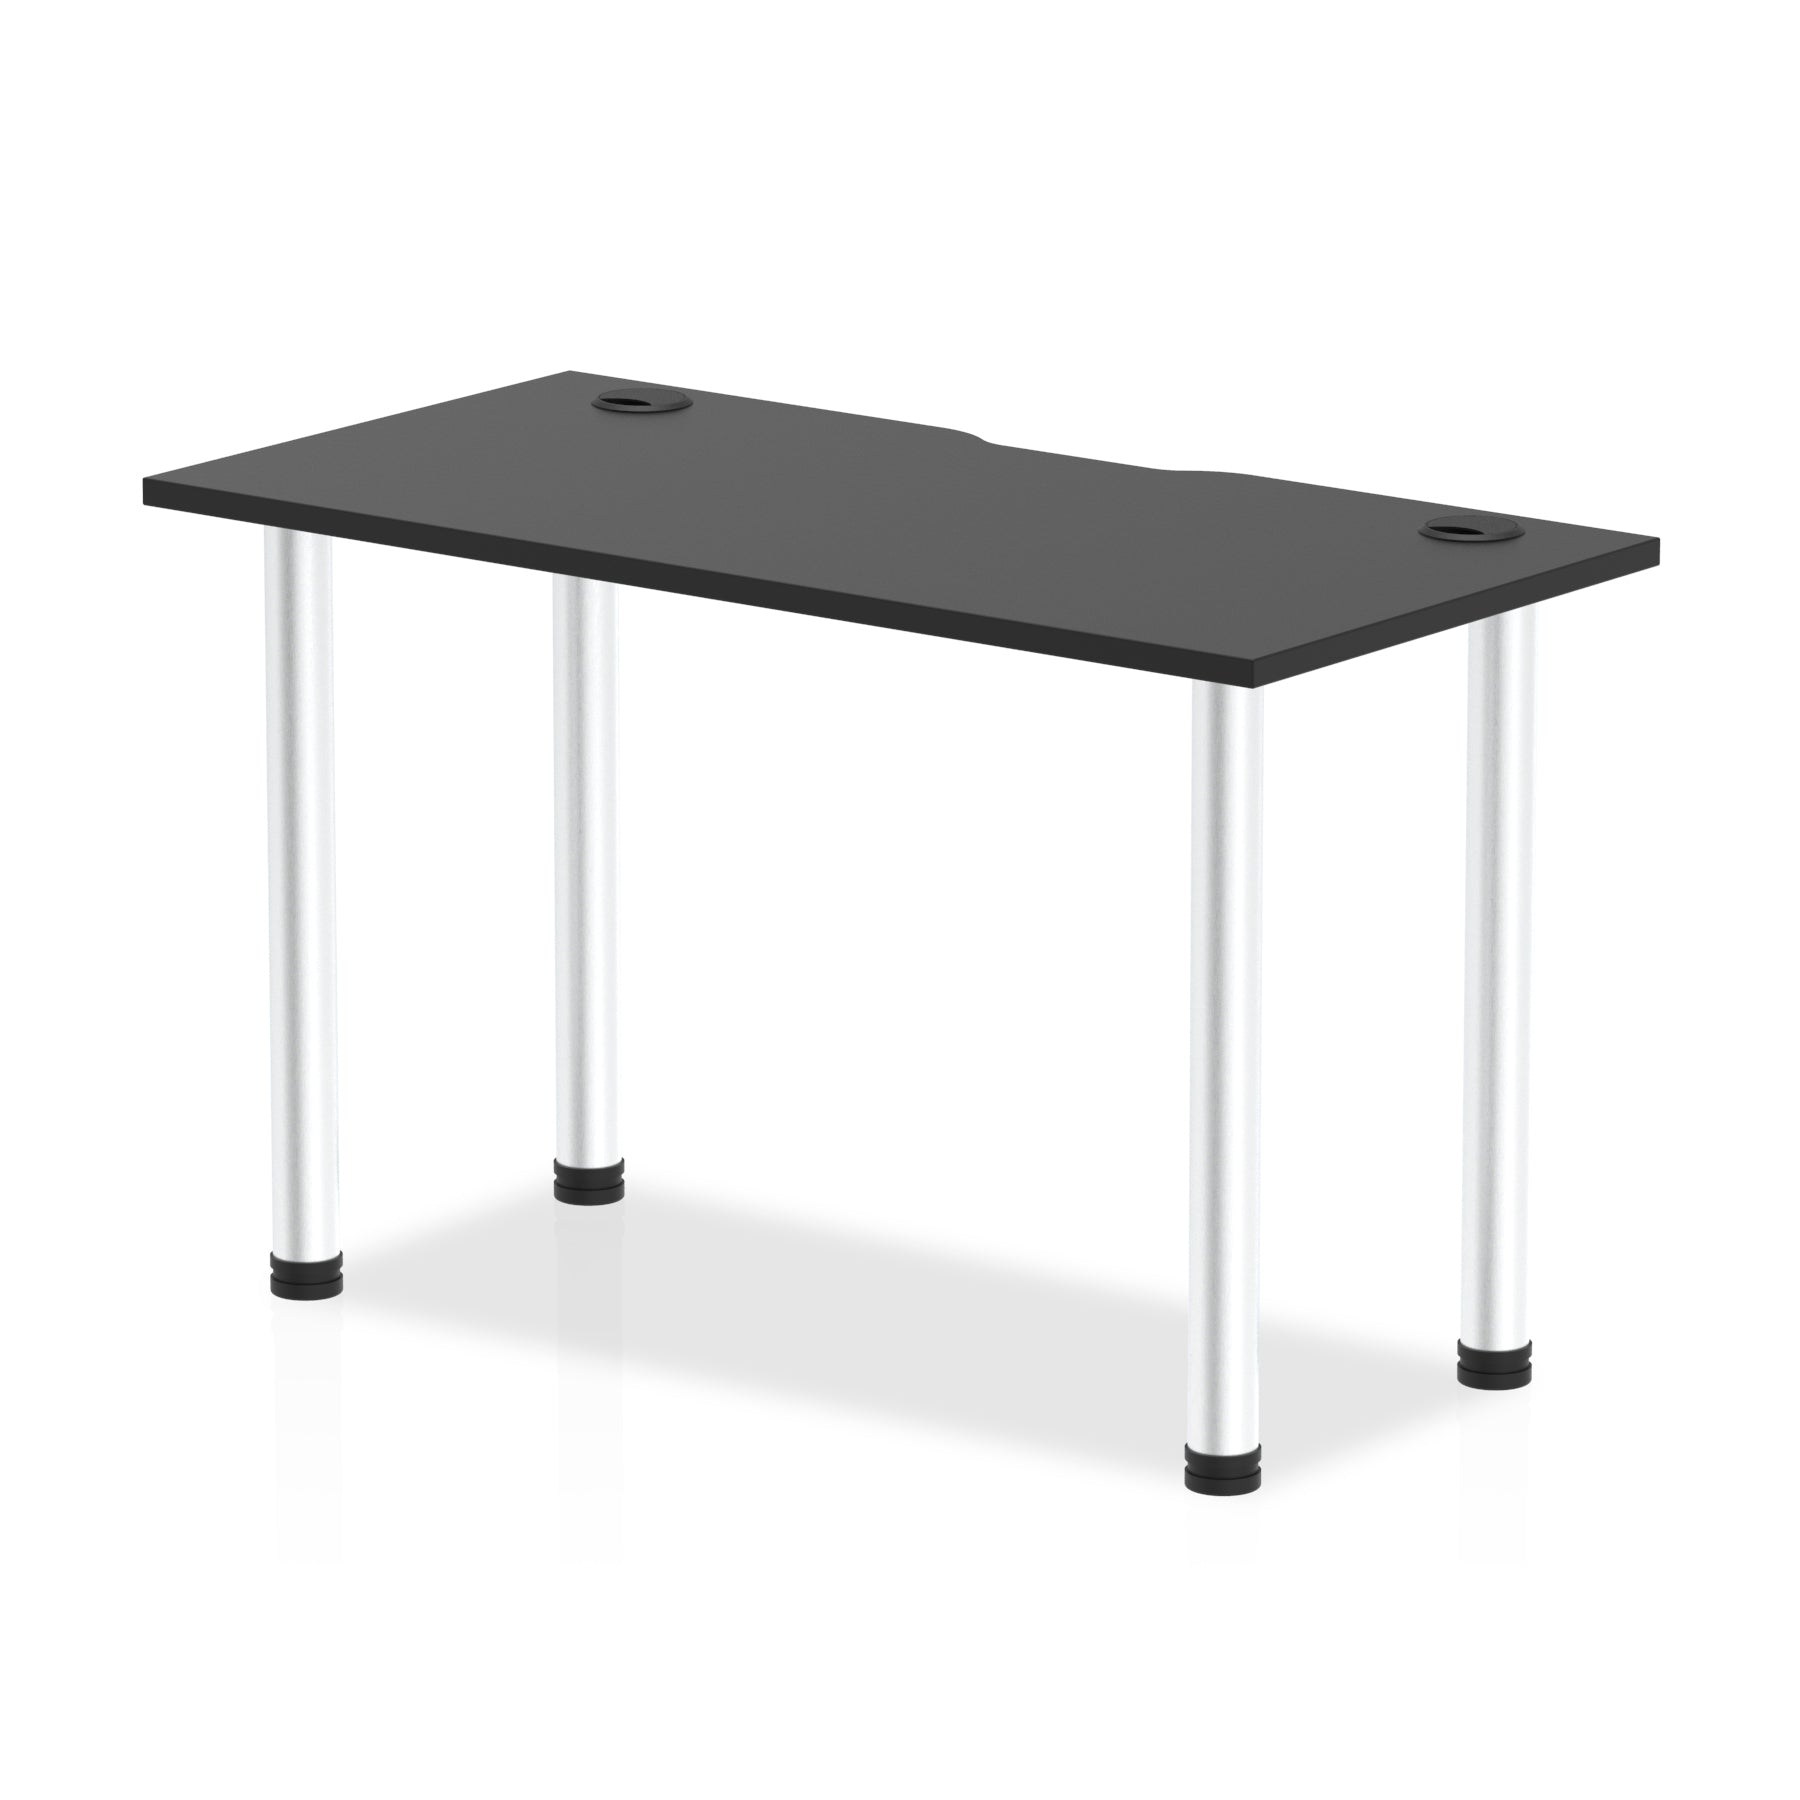 Photos - Dining Table Dynamic Office Solutions Impulse Black Series Slimline Straight Table I004 